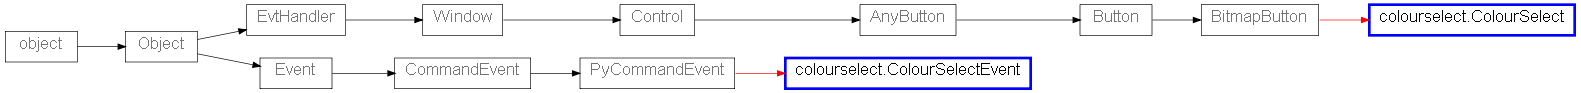 Inheritance diagram of colourselect